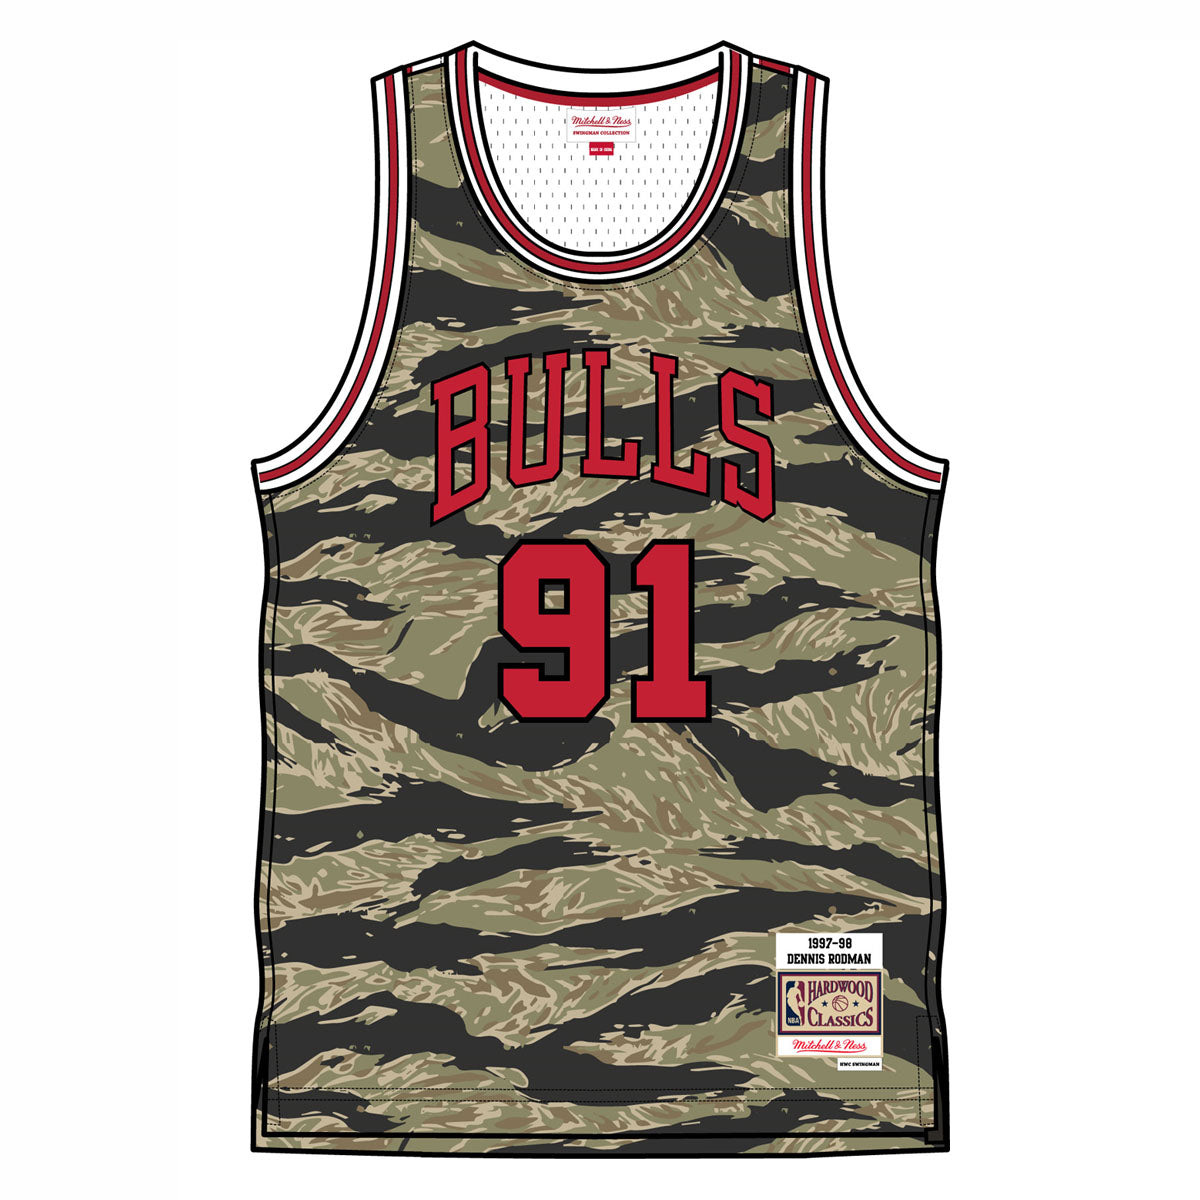 Men's Chicago Bulls Dennis Rodman Mitchell & Ness Pink 1997/98